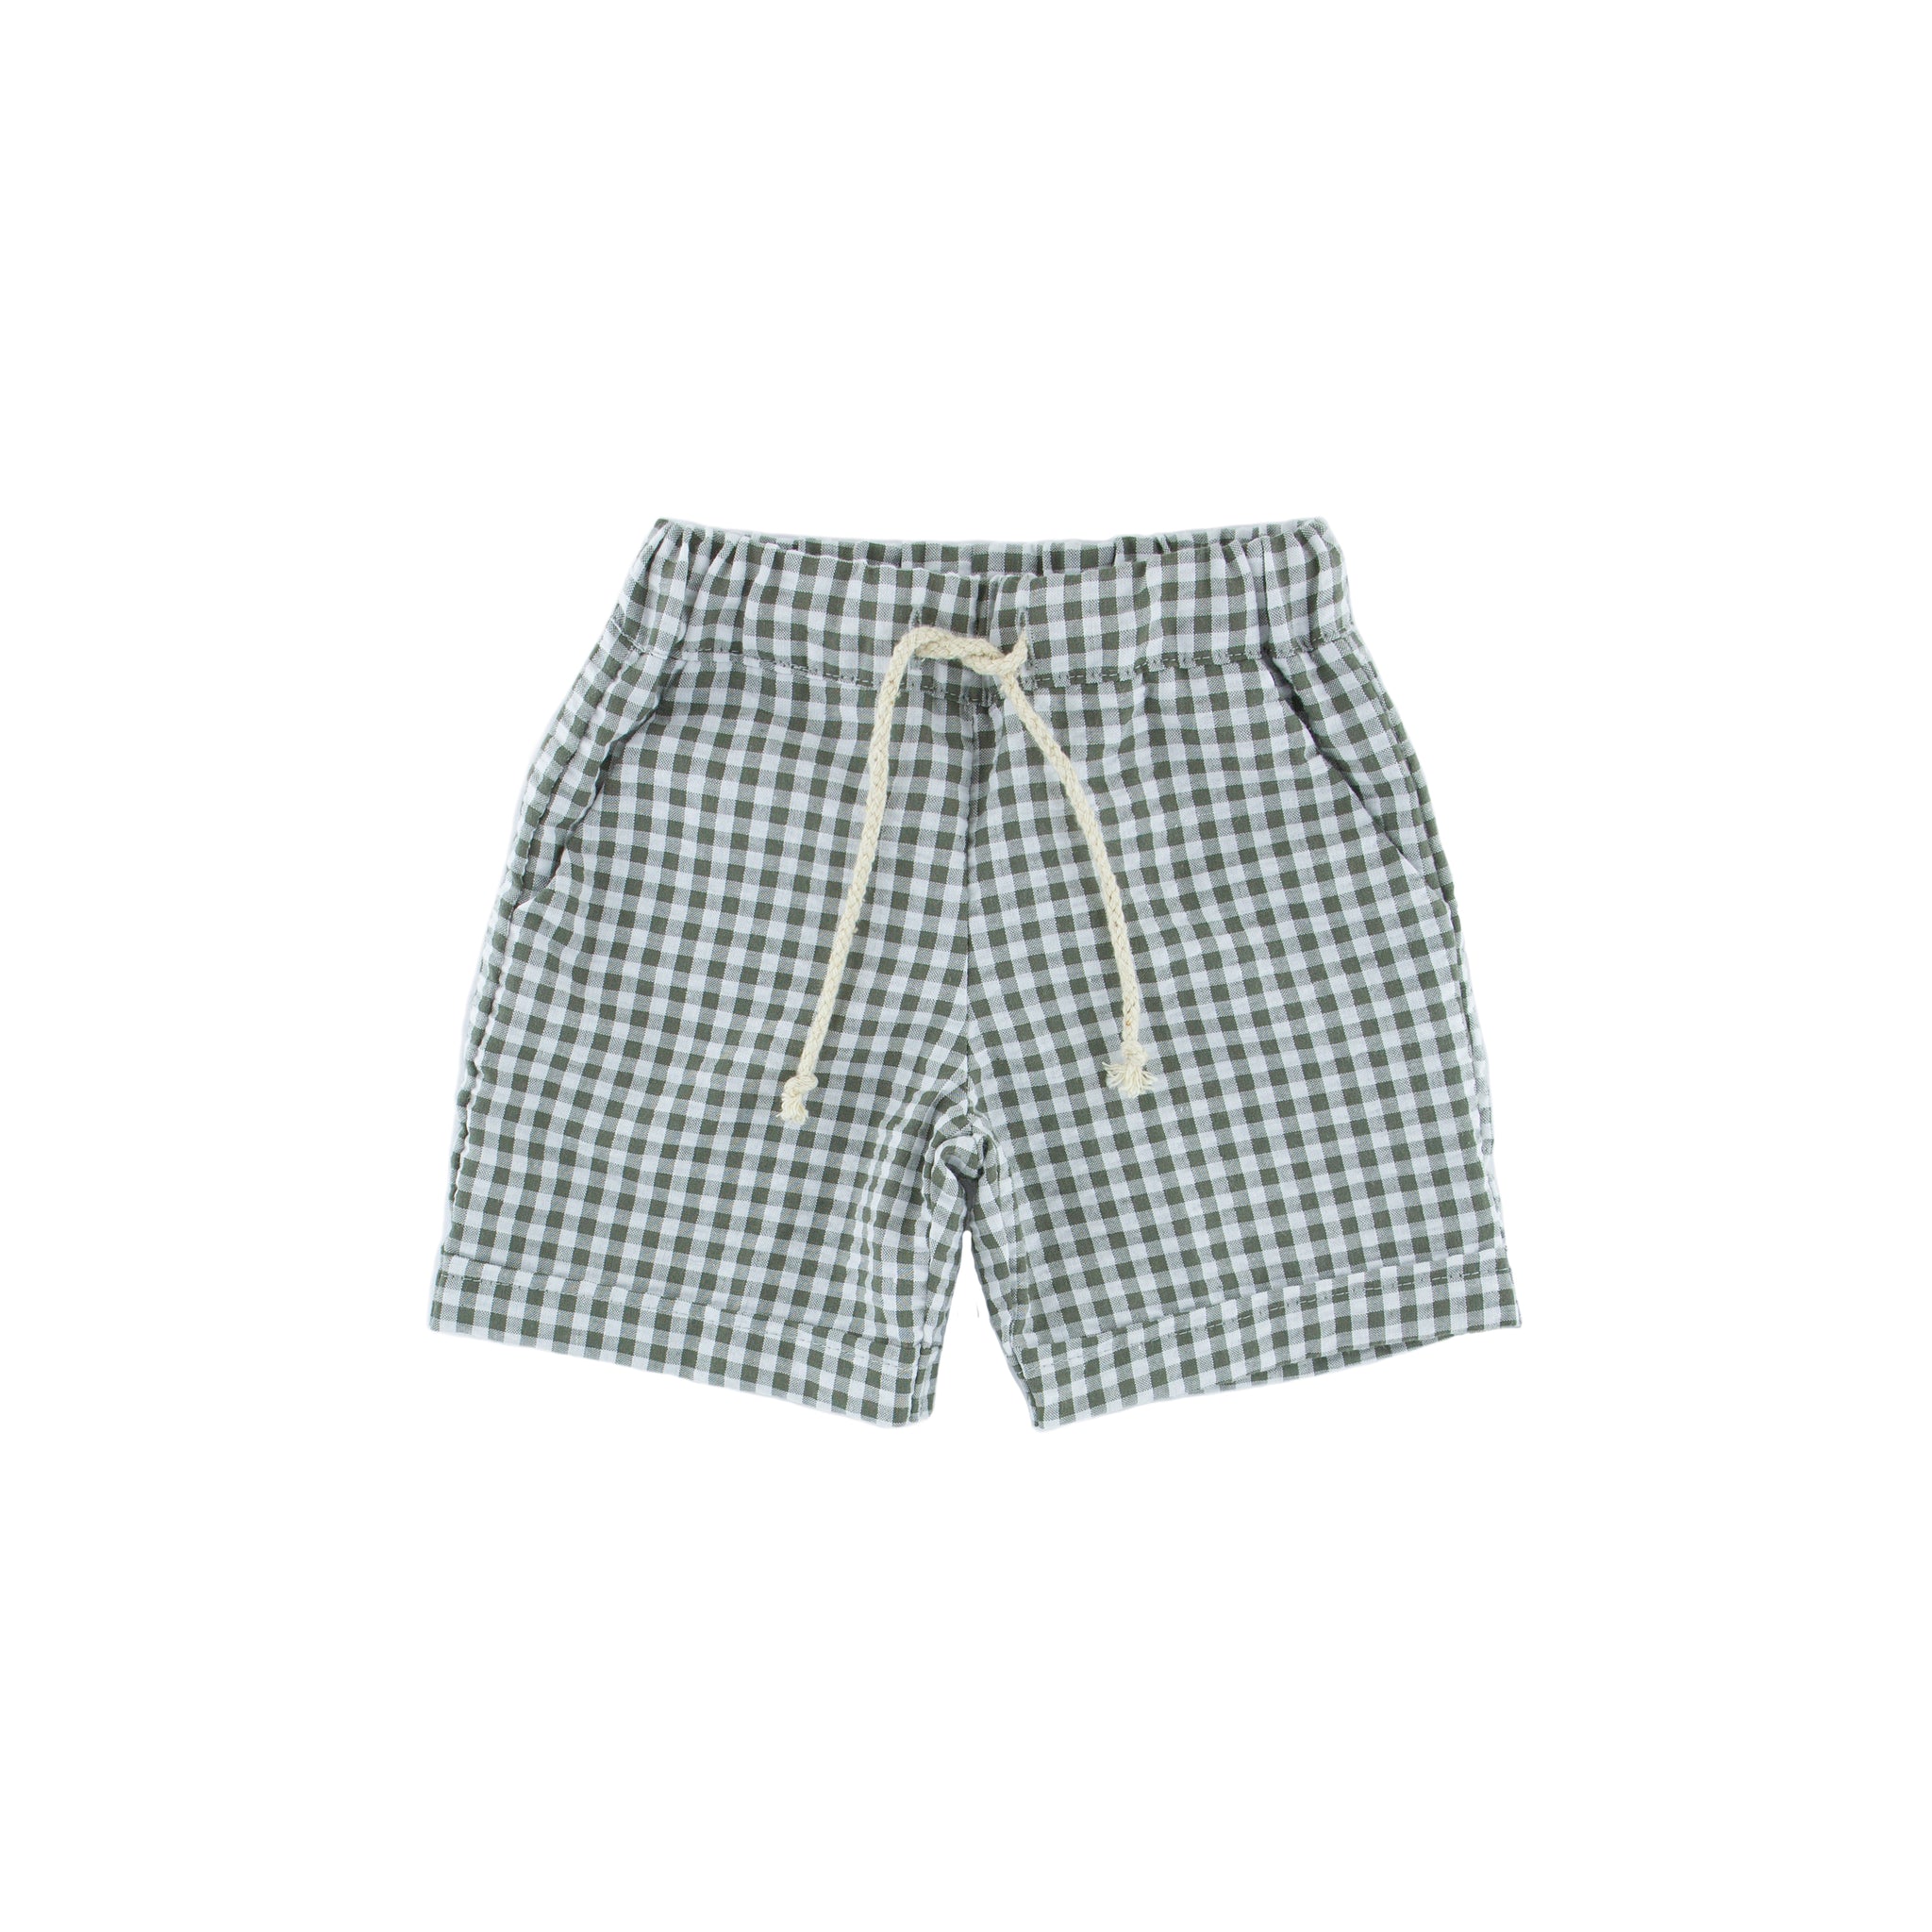 Julian shorts - checkered khaki